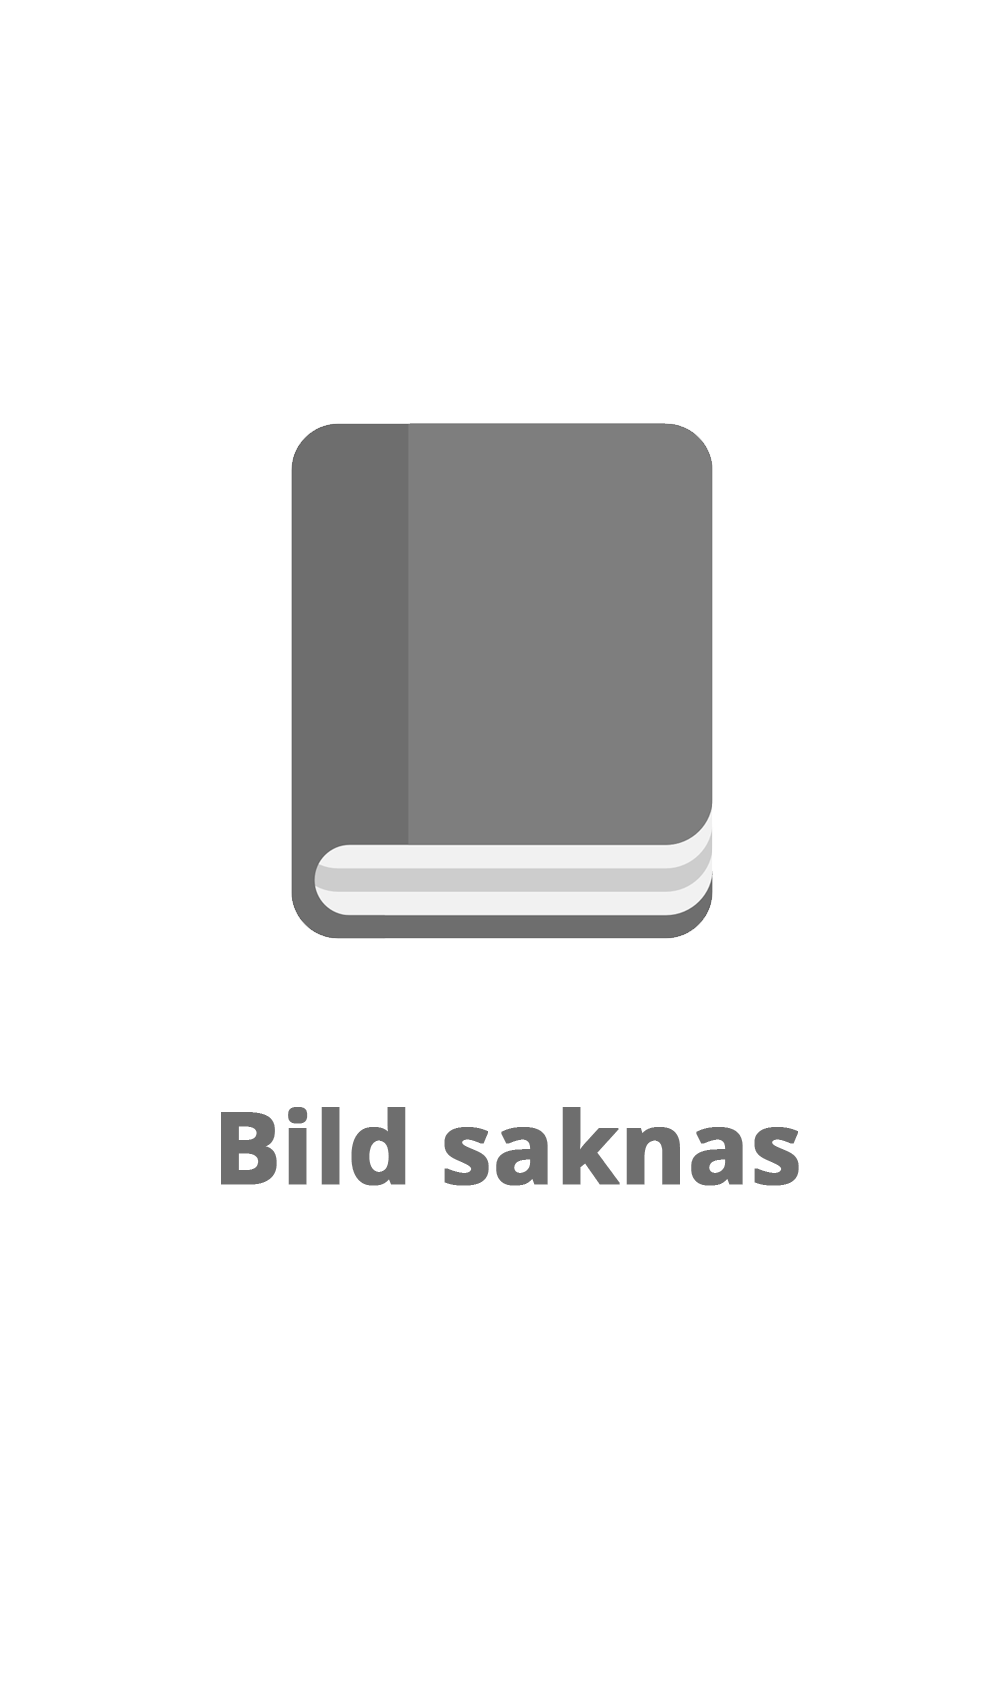 Apache Batik: SVG Toolkit